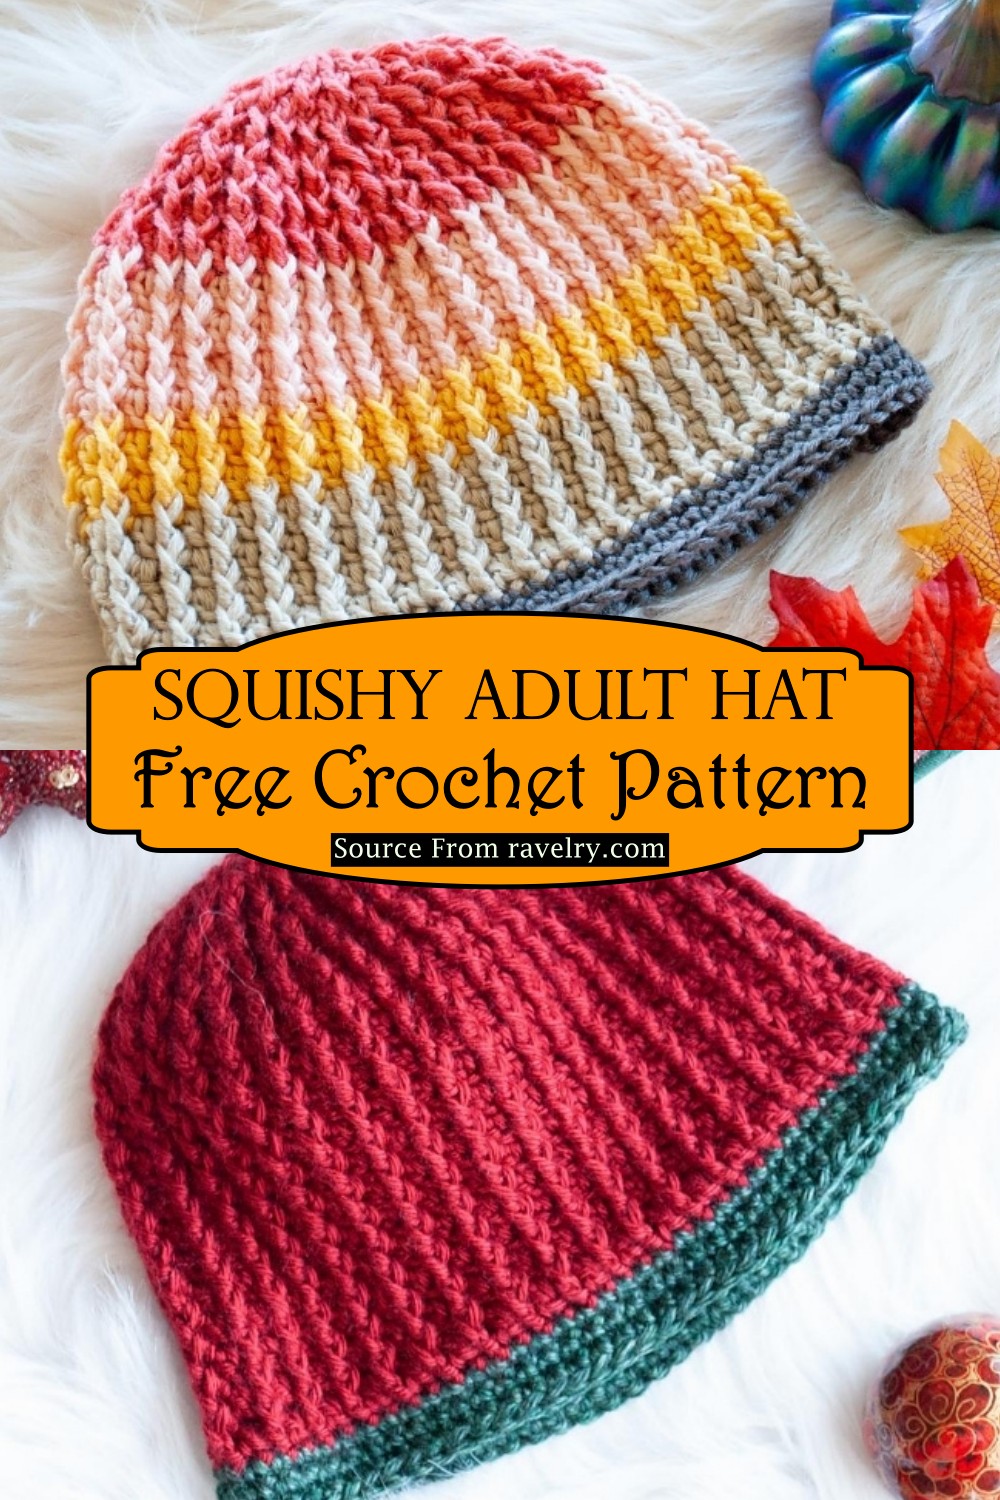 Crochet Squishy Adult Hat Pattern